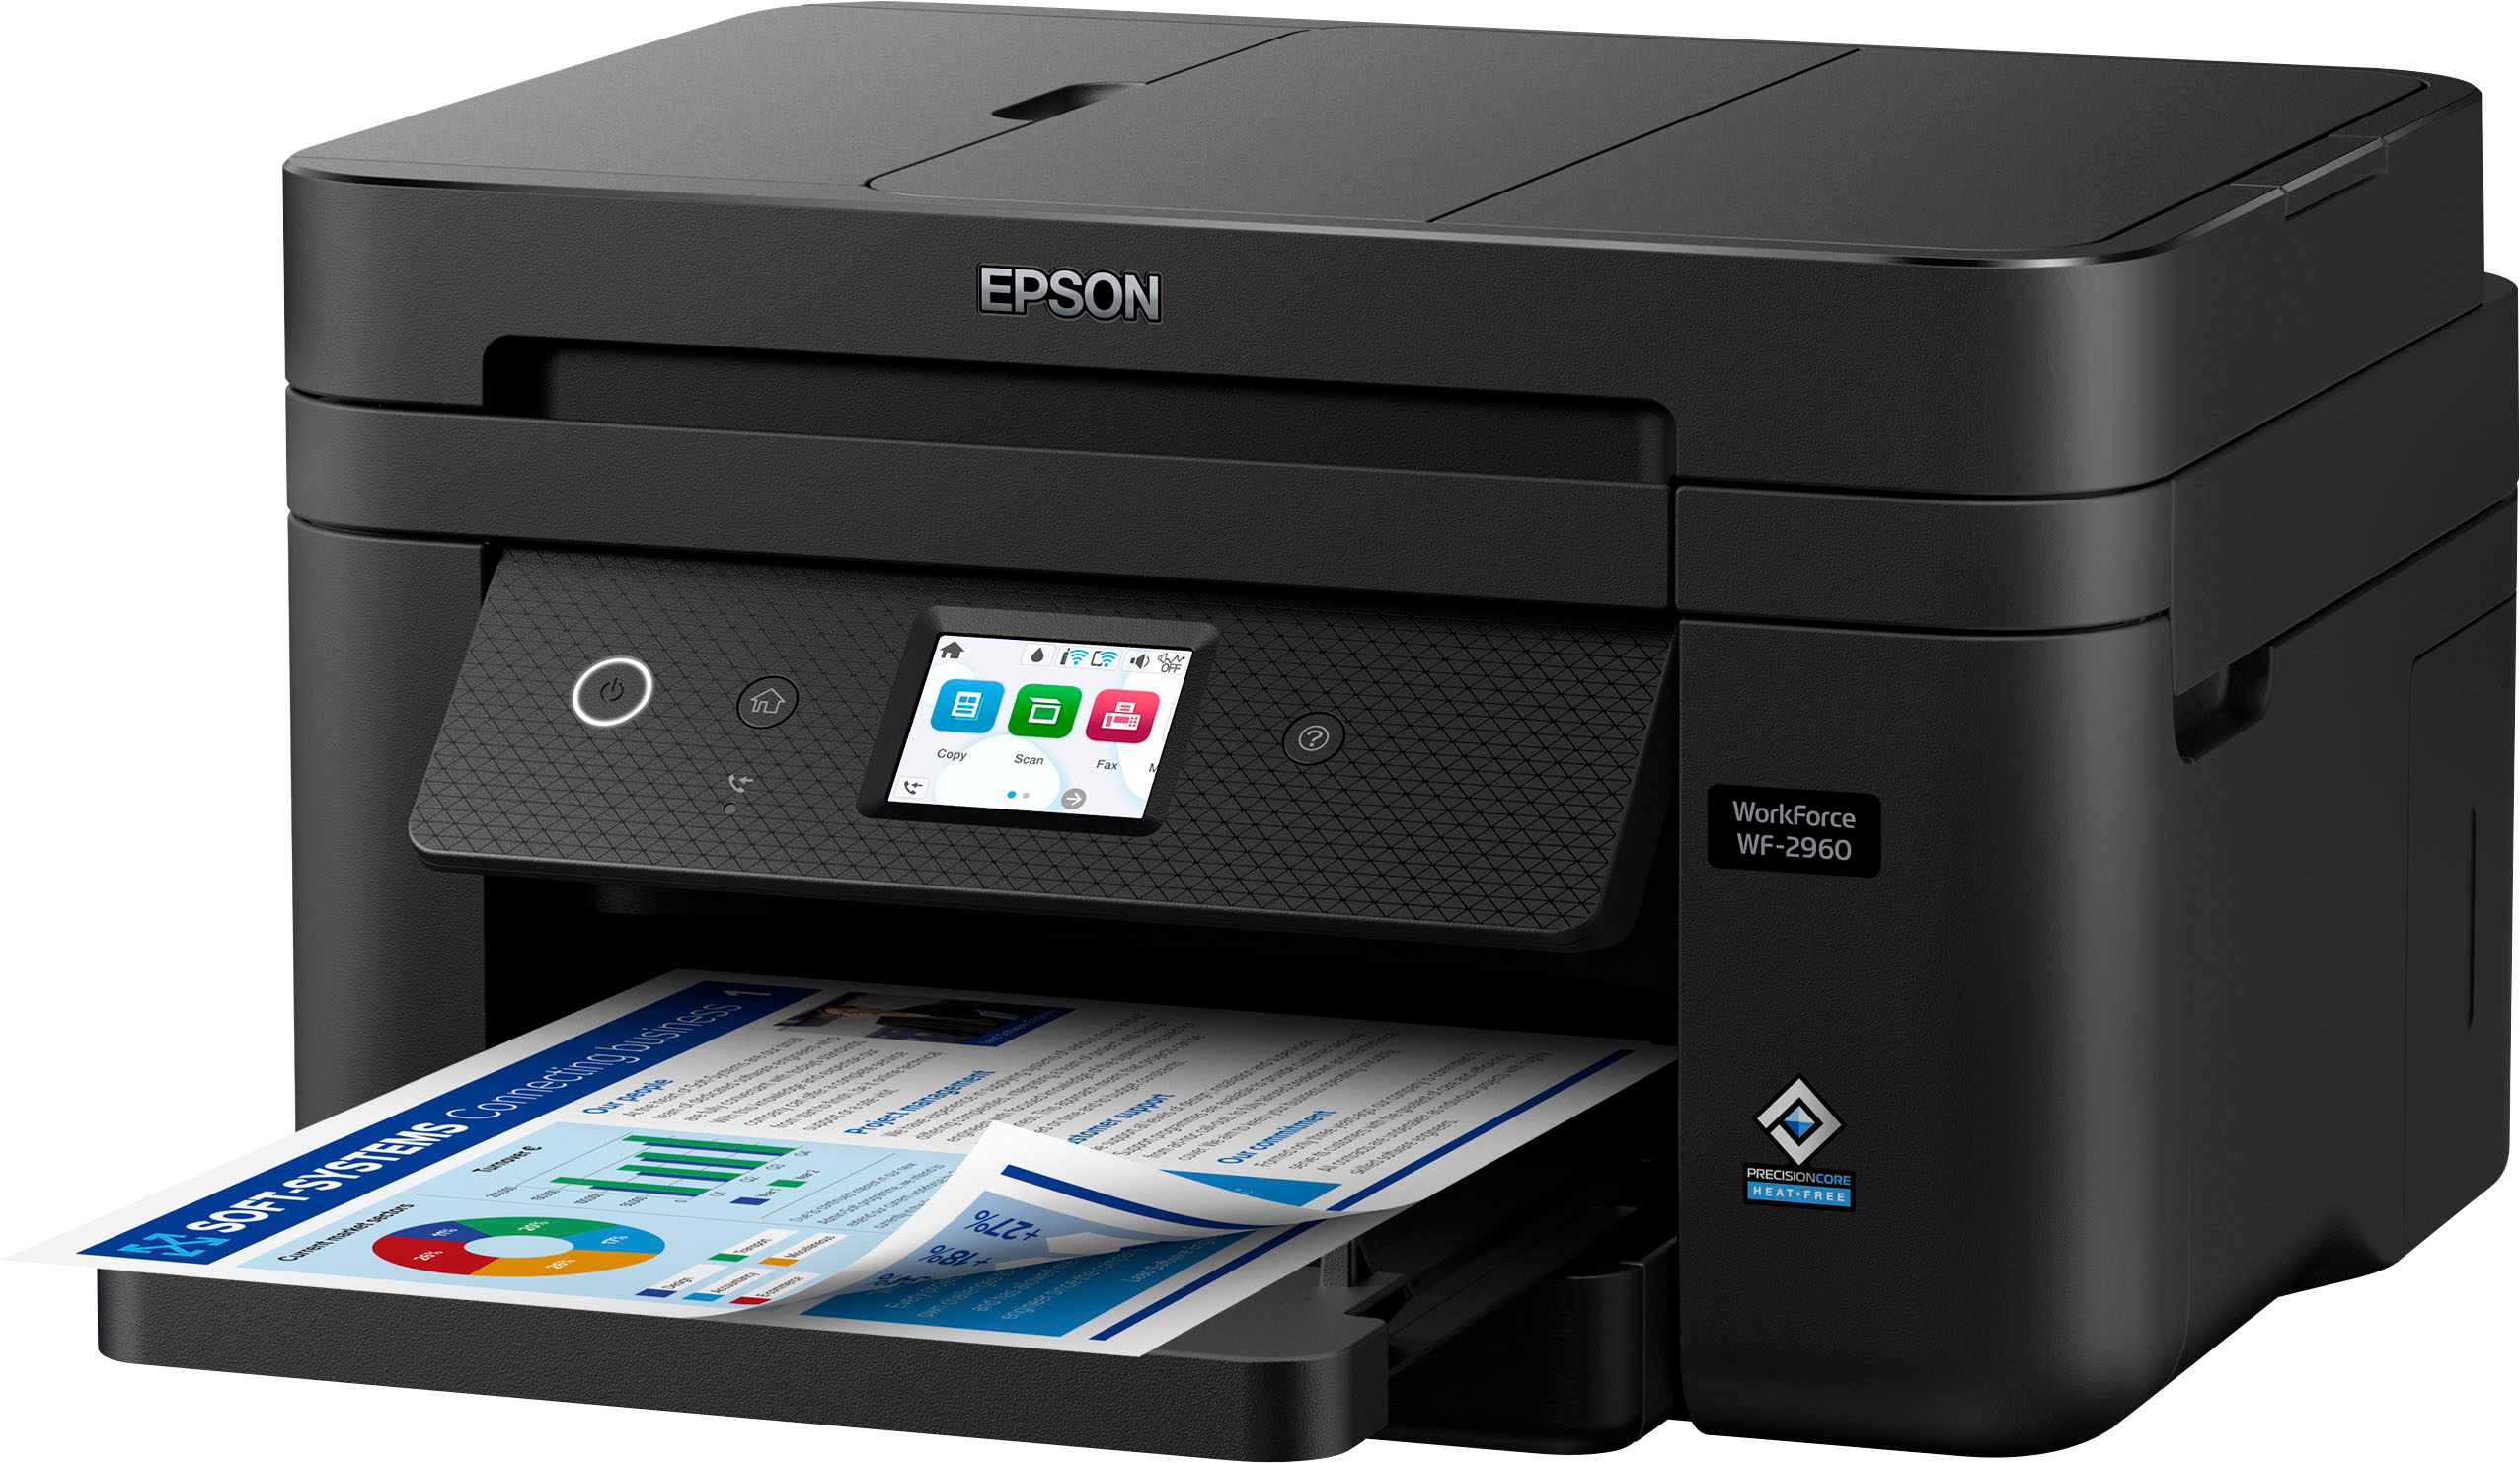 Epson WorkForce WF-2860 Inkjet Printer - Tested Works Well - Used